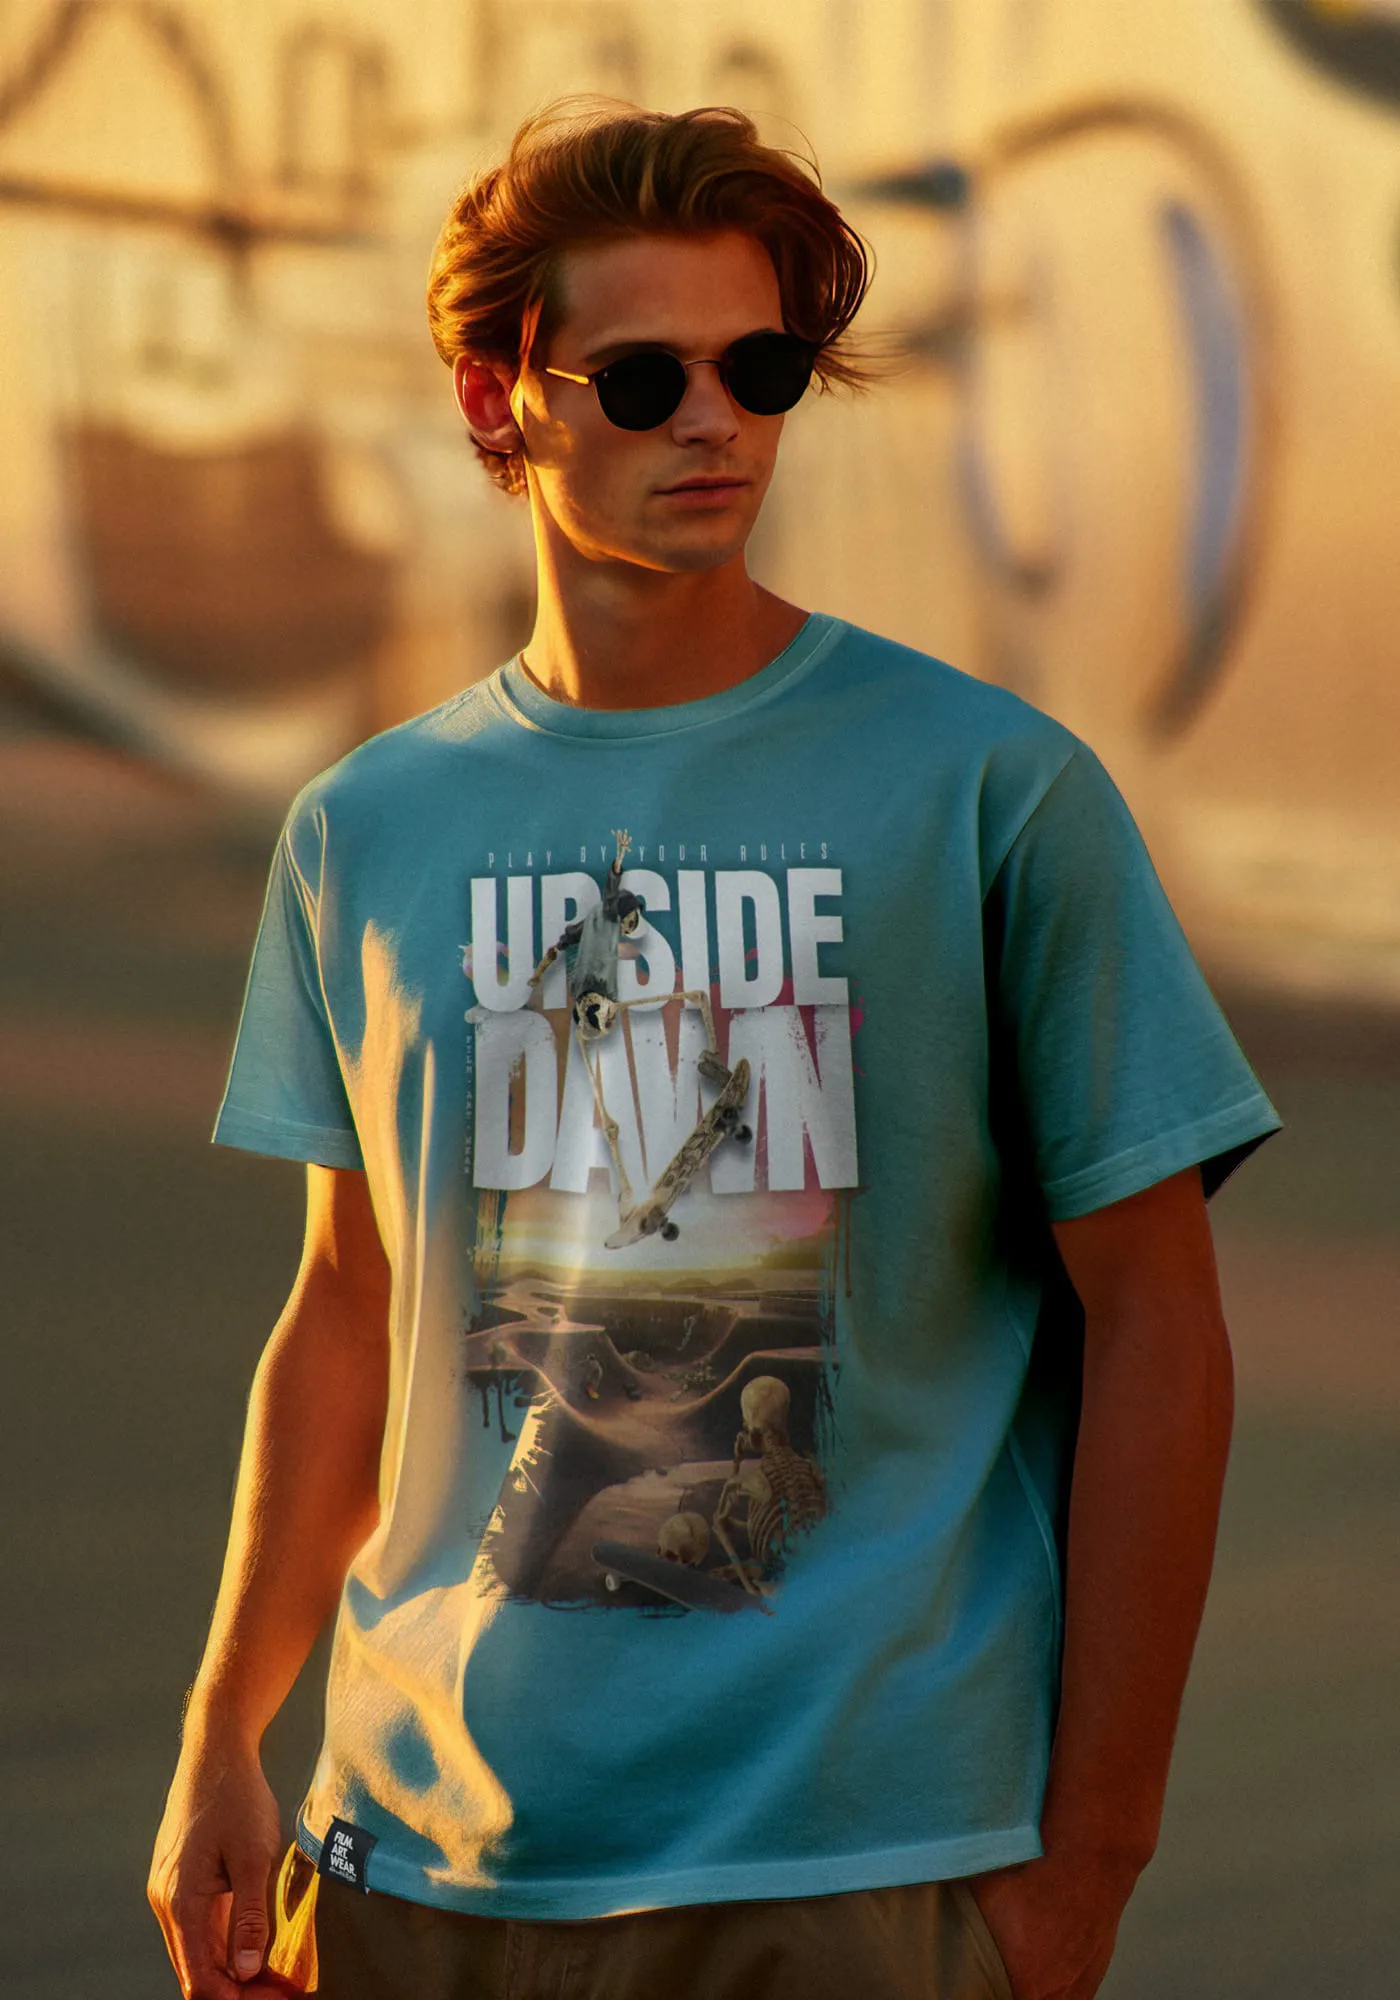 Jordan trägt Skater T-Shirt mit Frontprints Upside Dawn skater kleidung